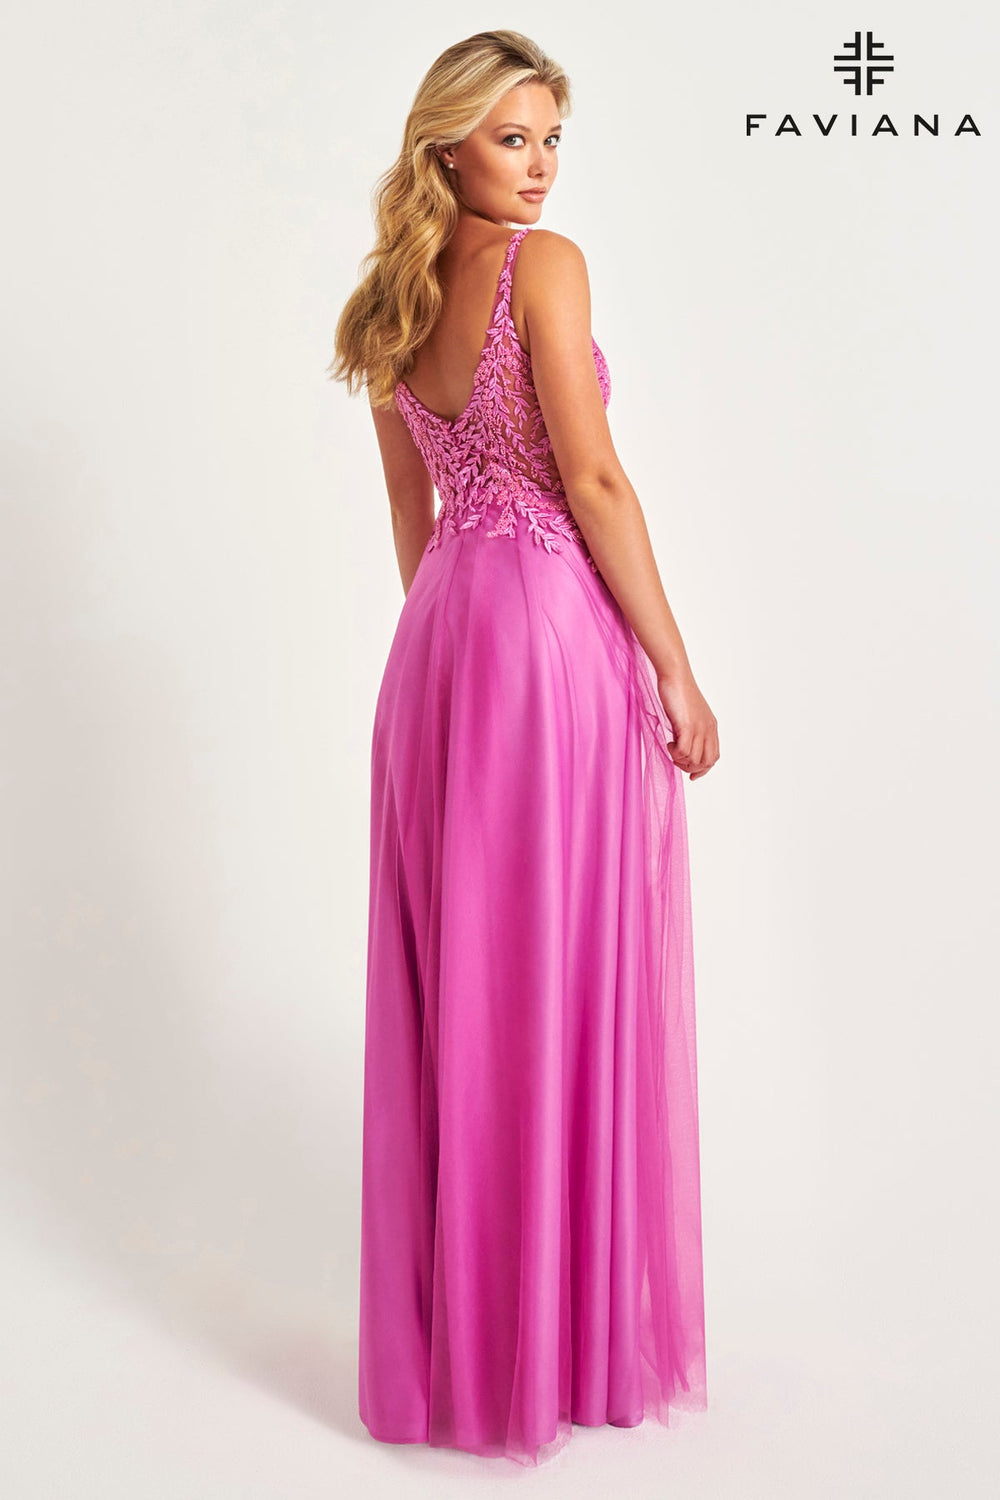 Faviana Prom Dress Faviana 11055 Dress